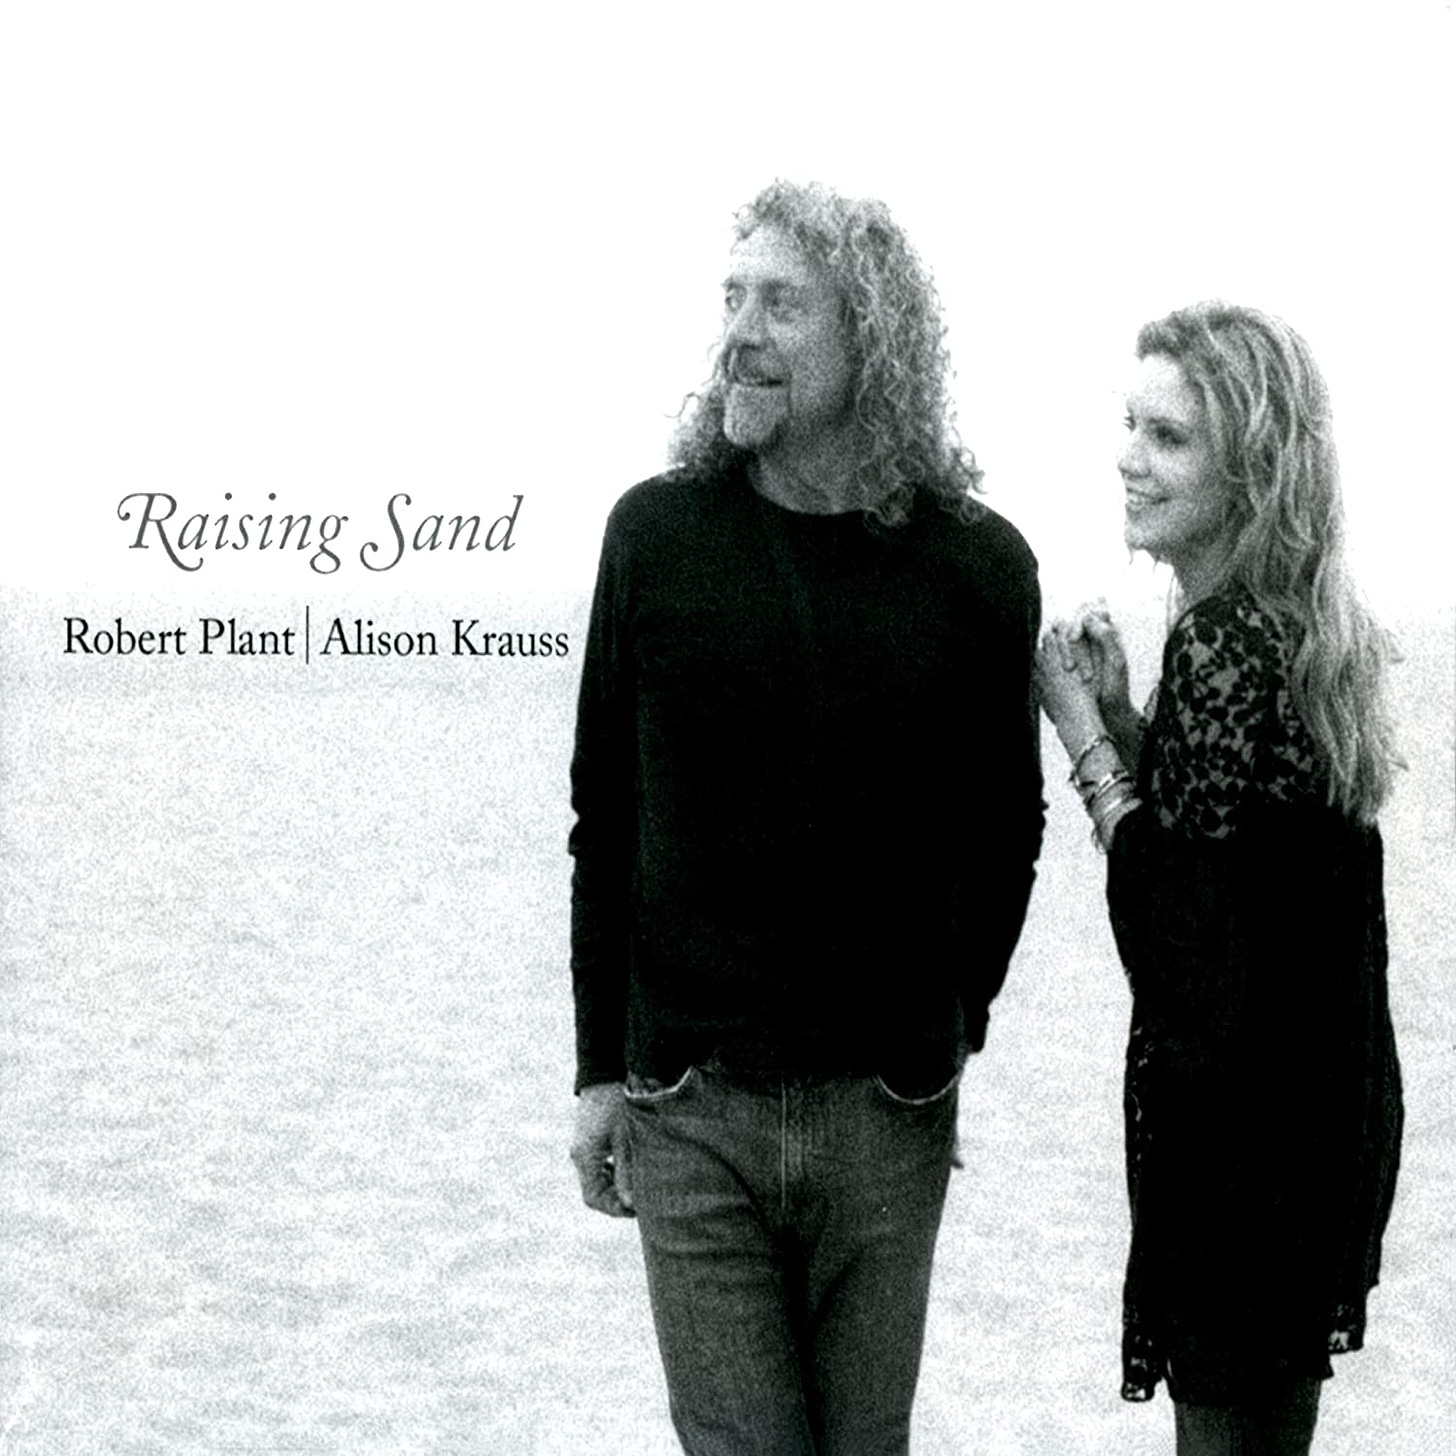 Robert Plant and Alison Krauss, Robert Plant, Alison Krauss - Raising Sand  - Amazon.com Music